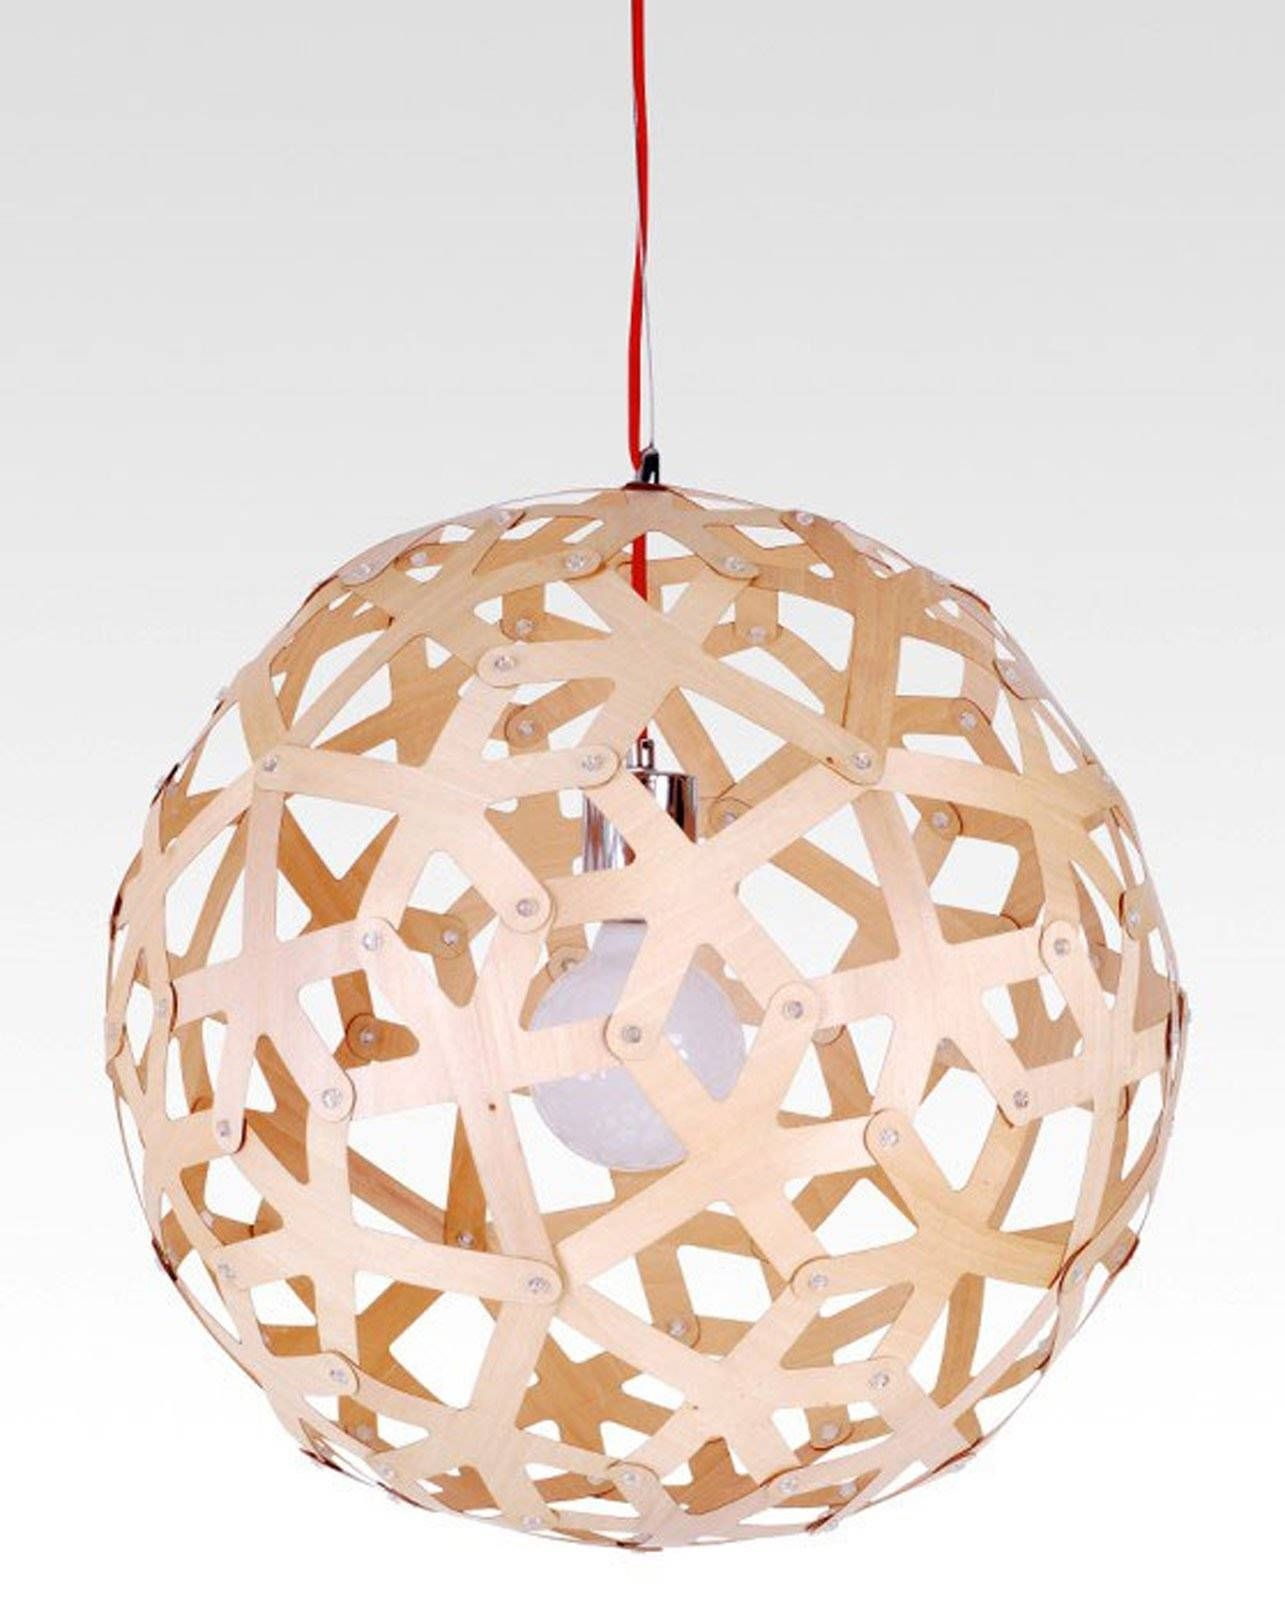 Buy Wood Pendant Light In Melbourne [sphere] – Youtube In Bent Wood Pendant Lights (Photo 3 of 15)